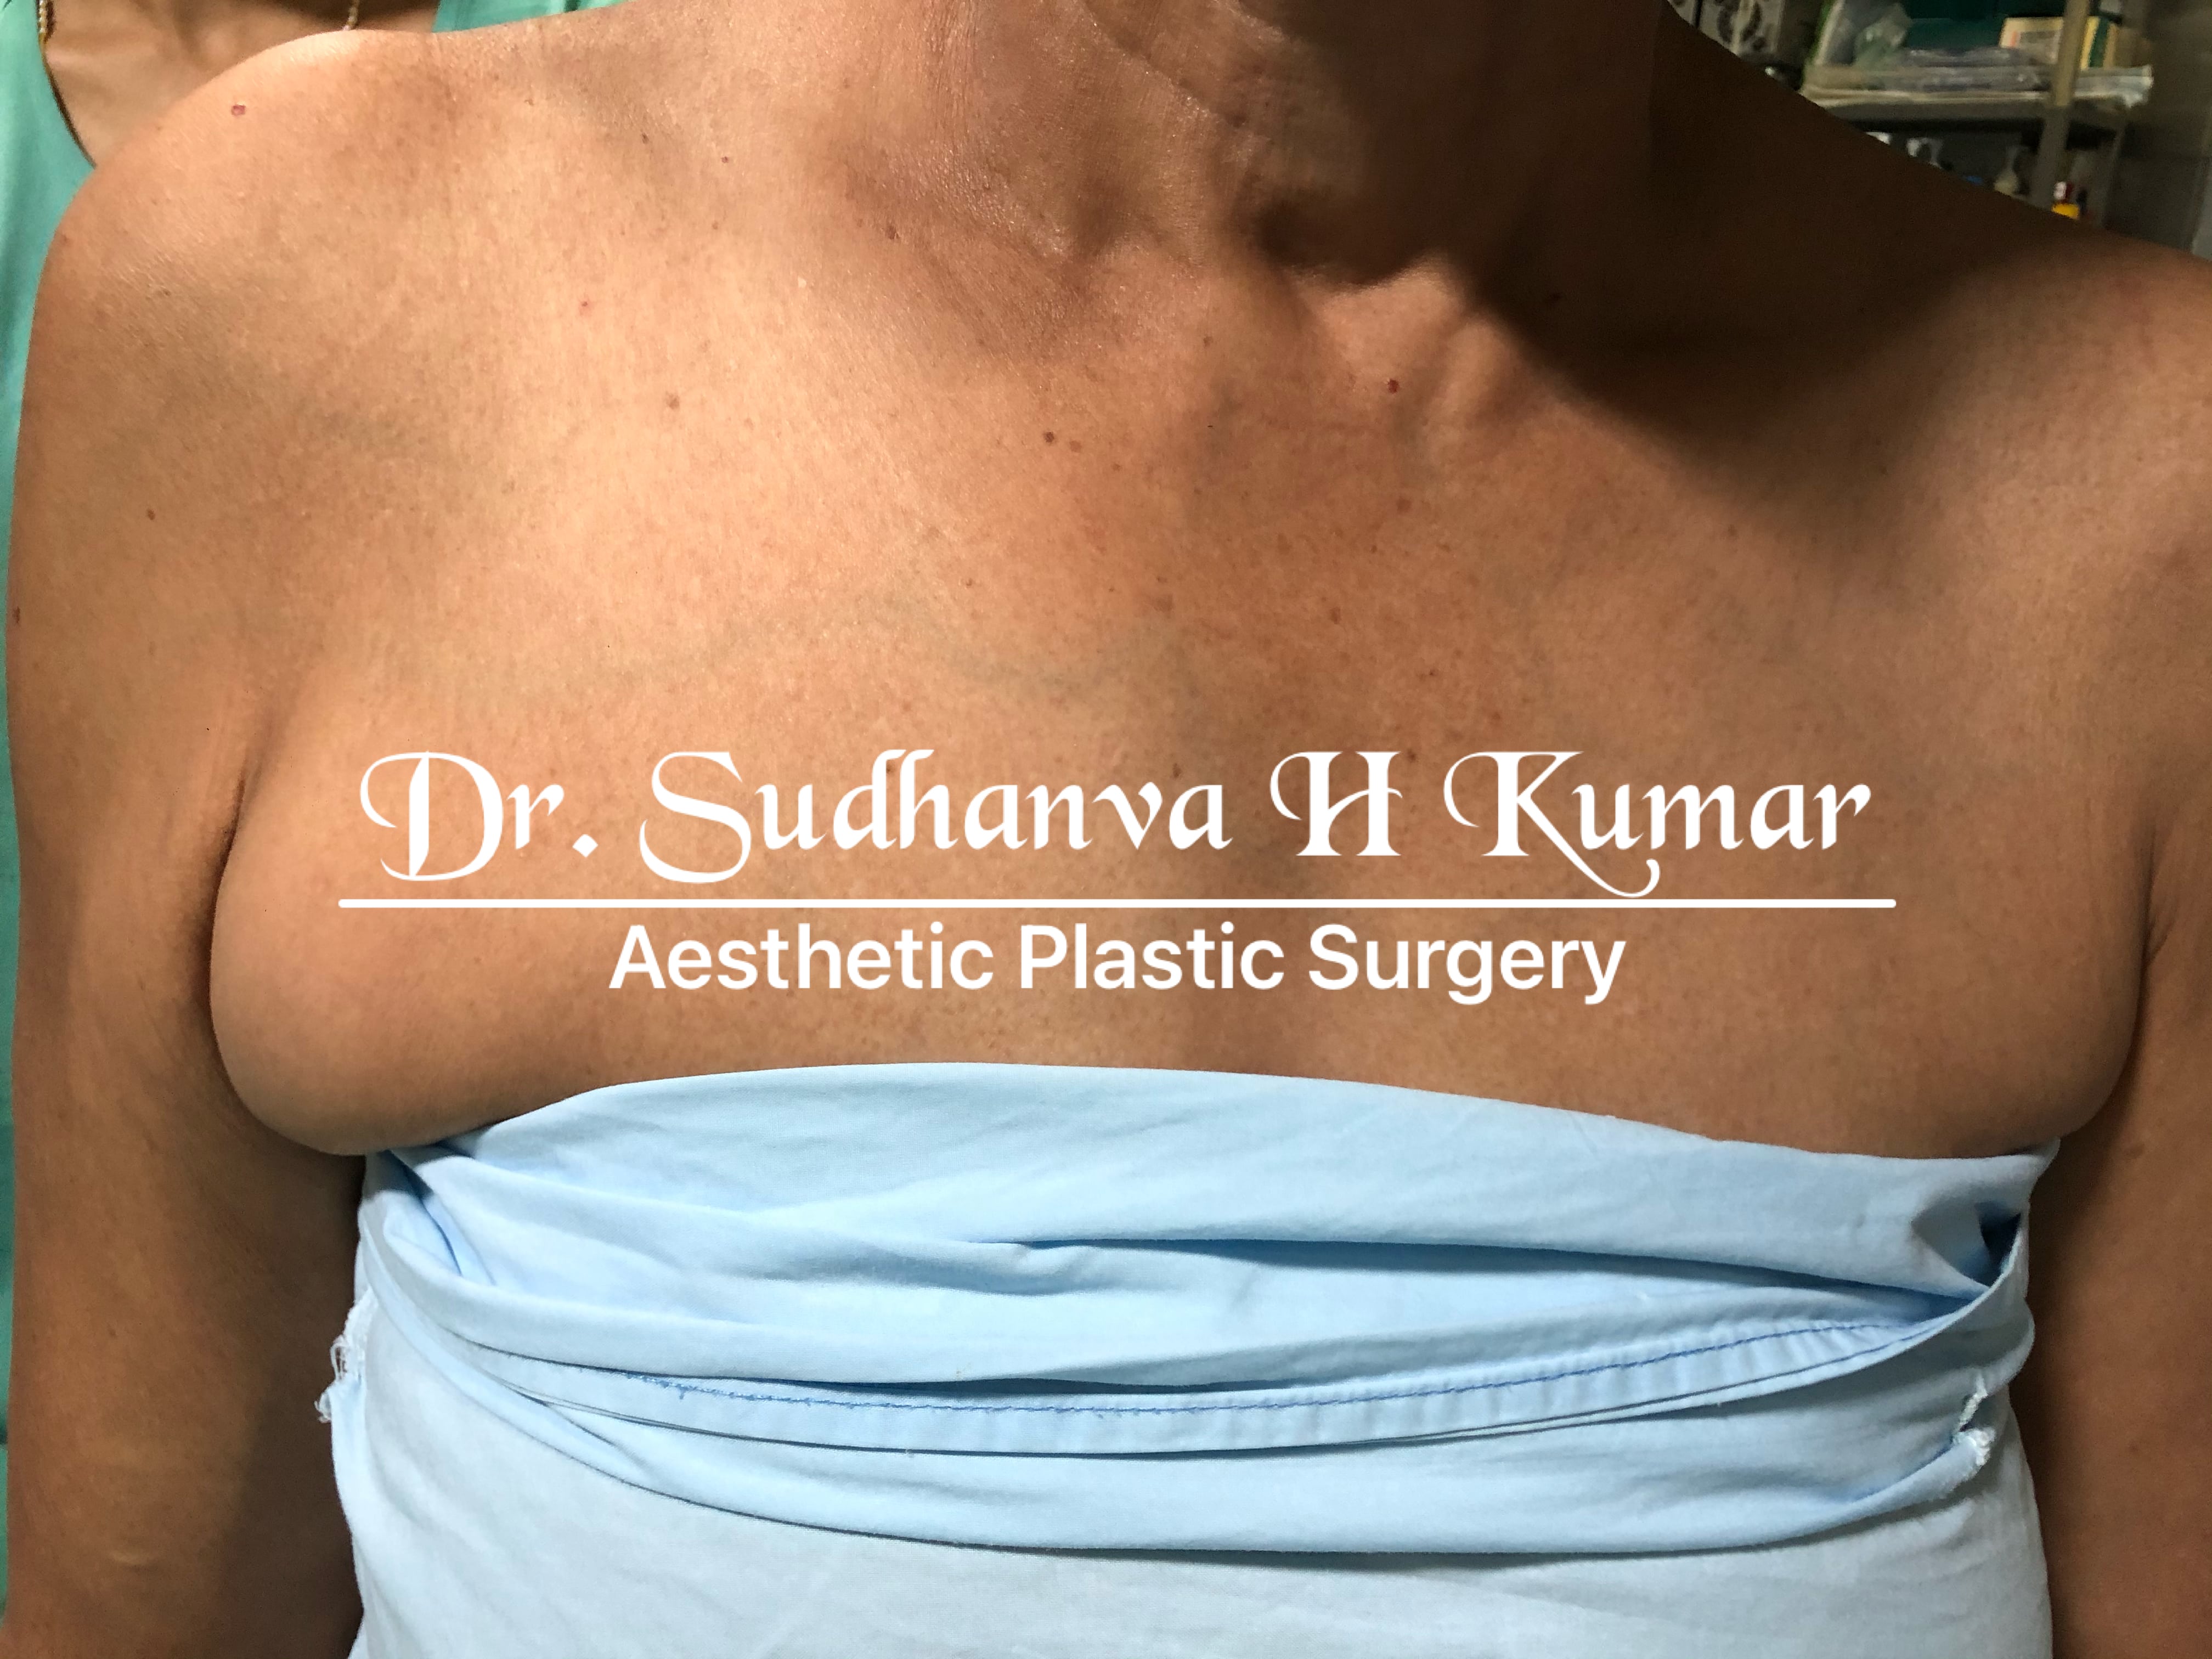 armpit fat removal surgery - Dr. Dr. Sudhanva